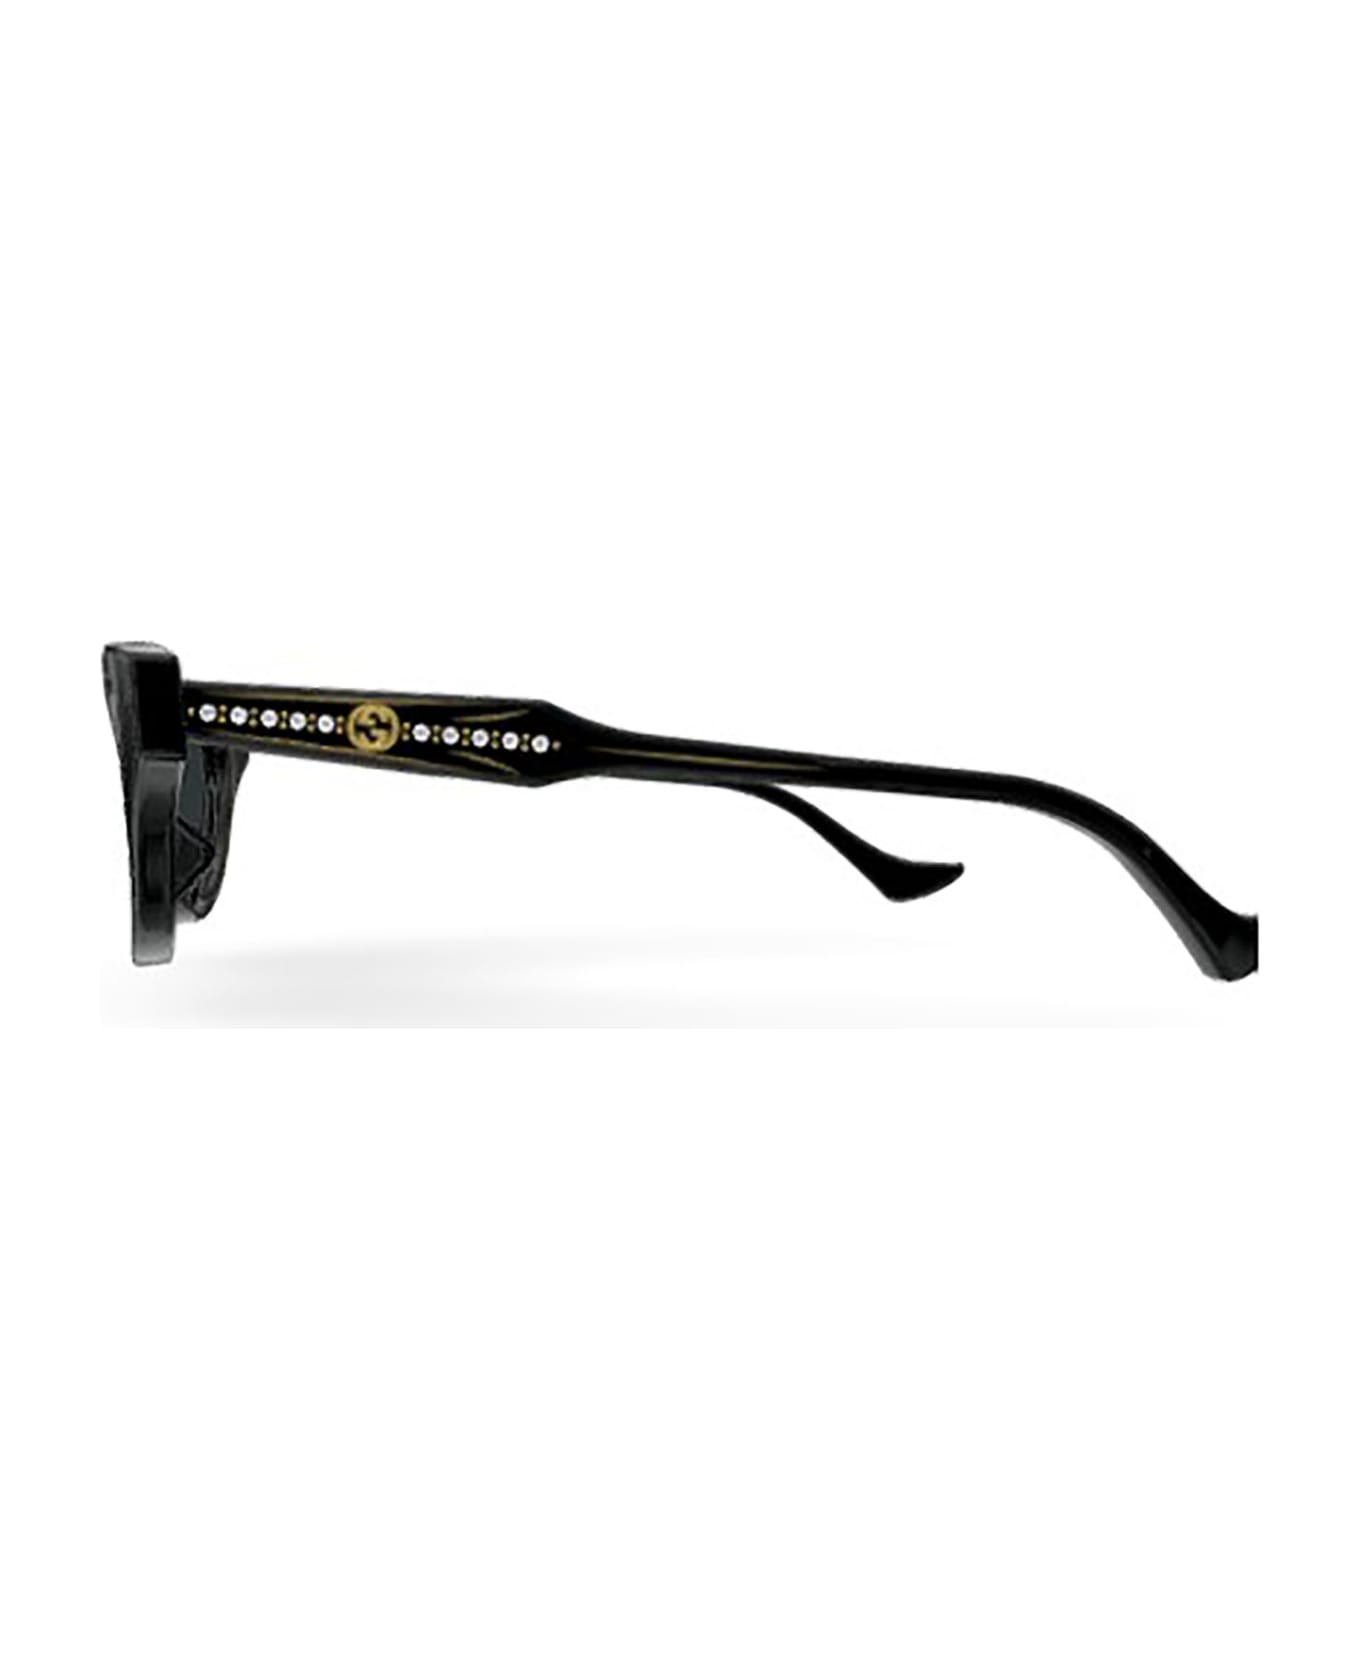 Gucci Eyewear GG1298S Sunglasses - Black Black Grey サングラス